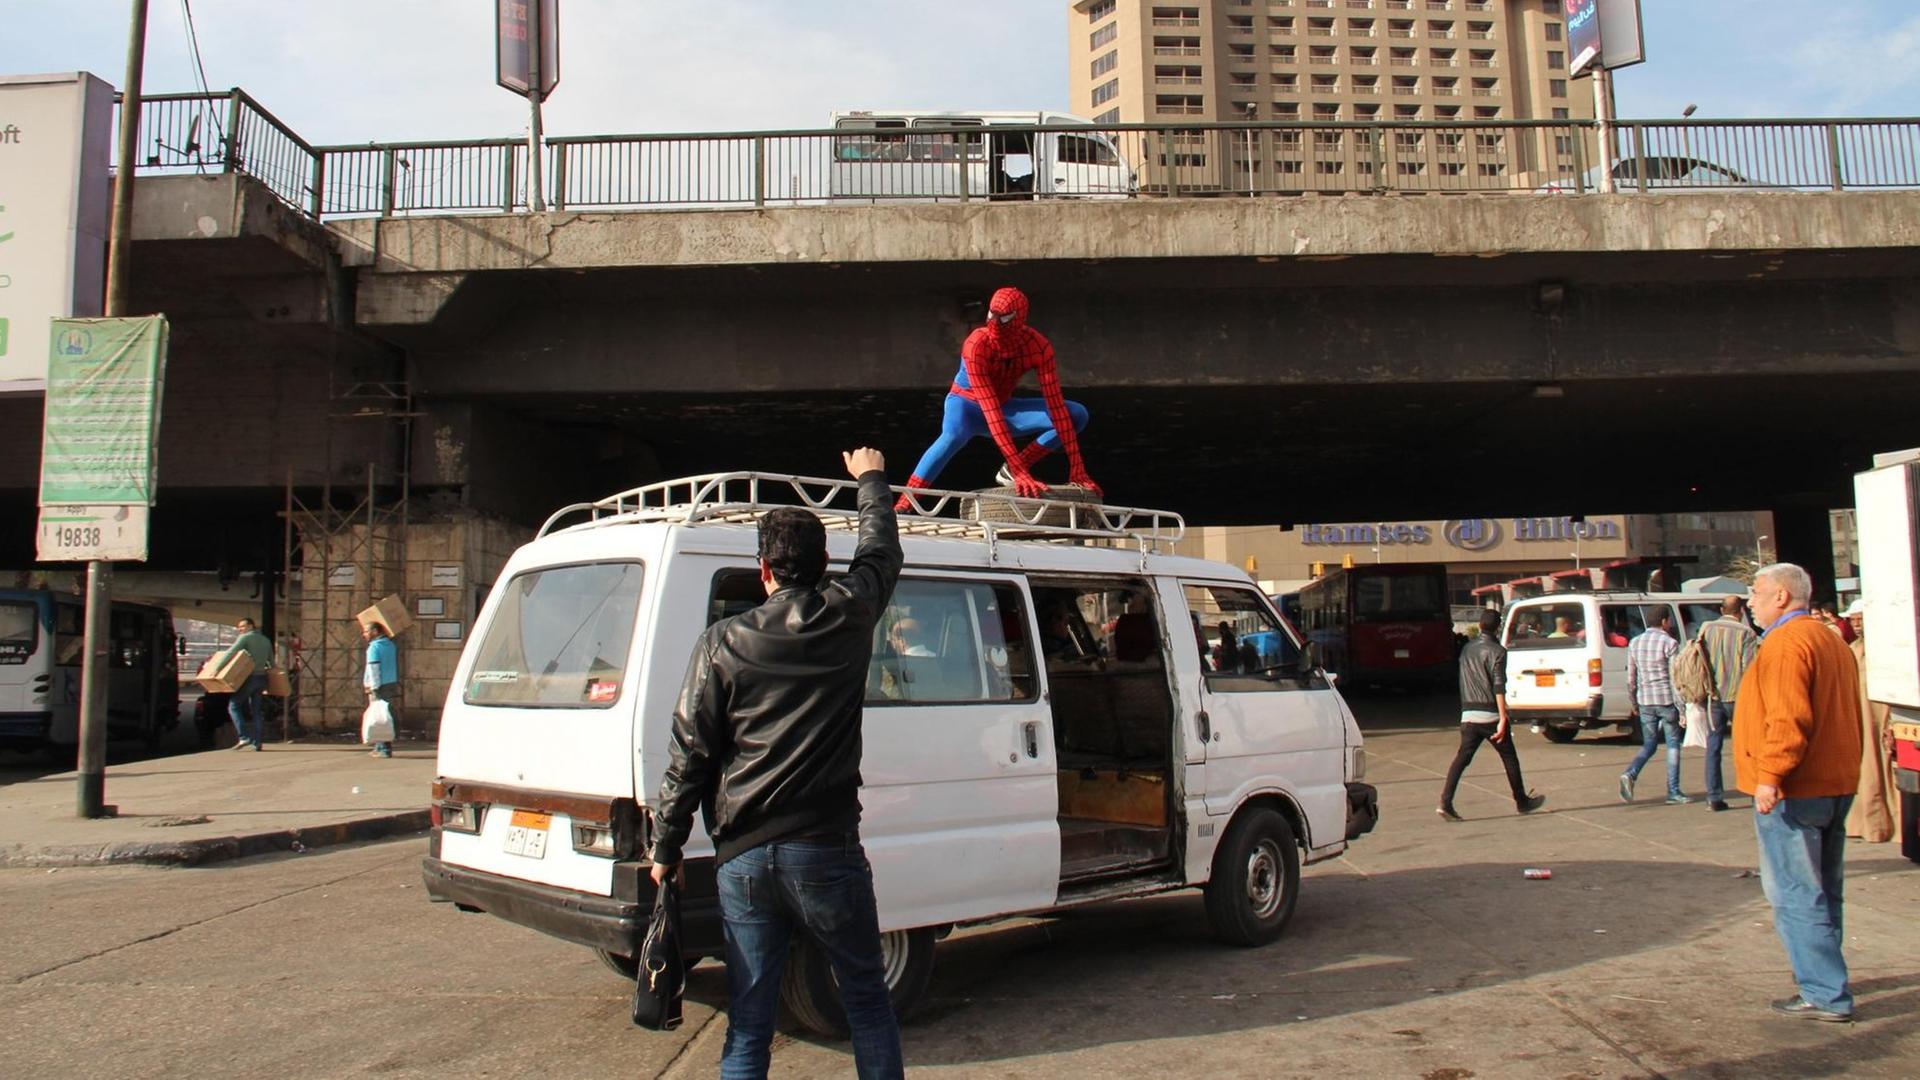 Kunstprojekt in Kairo: Der junge Ägypter Atef Saed als Spiderman verkleidet in der Hauptstadt